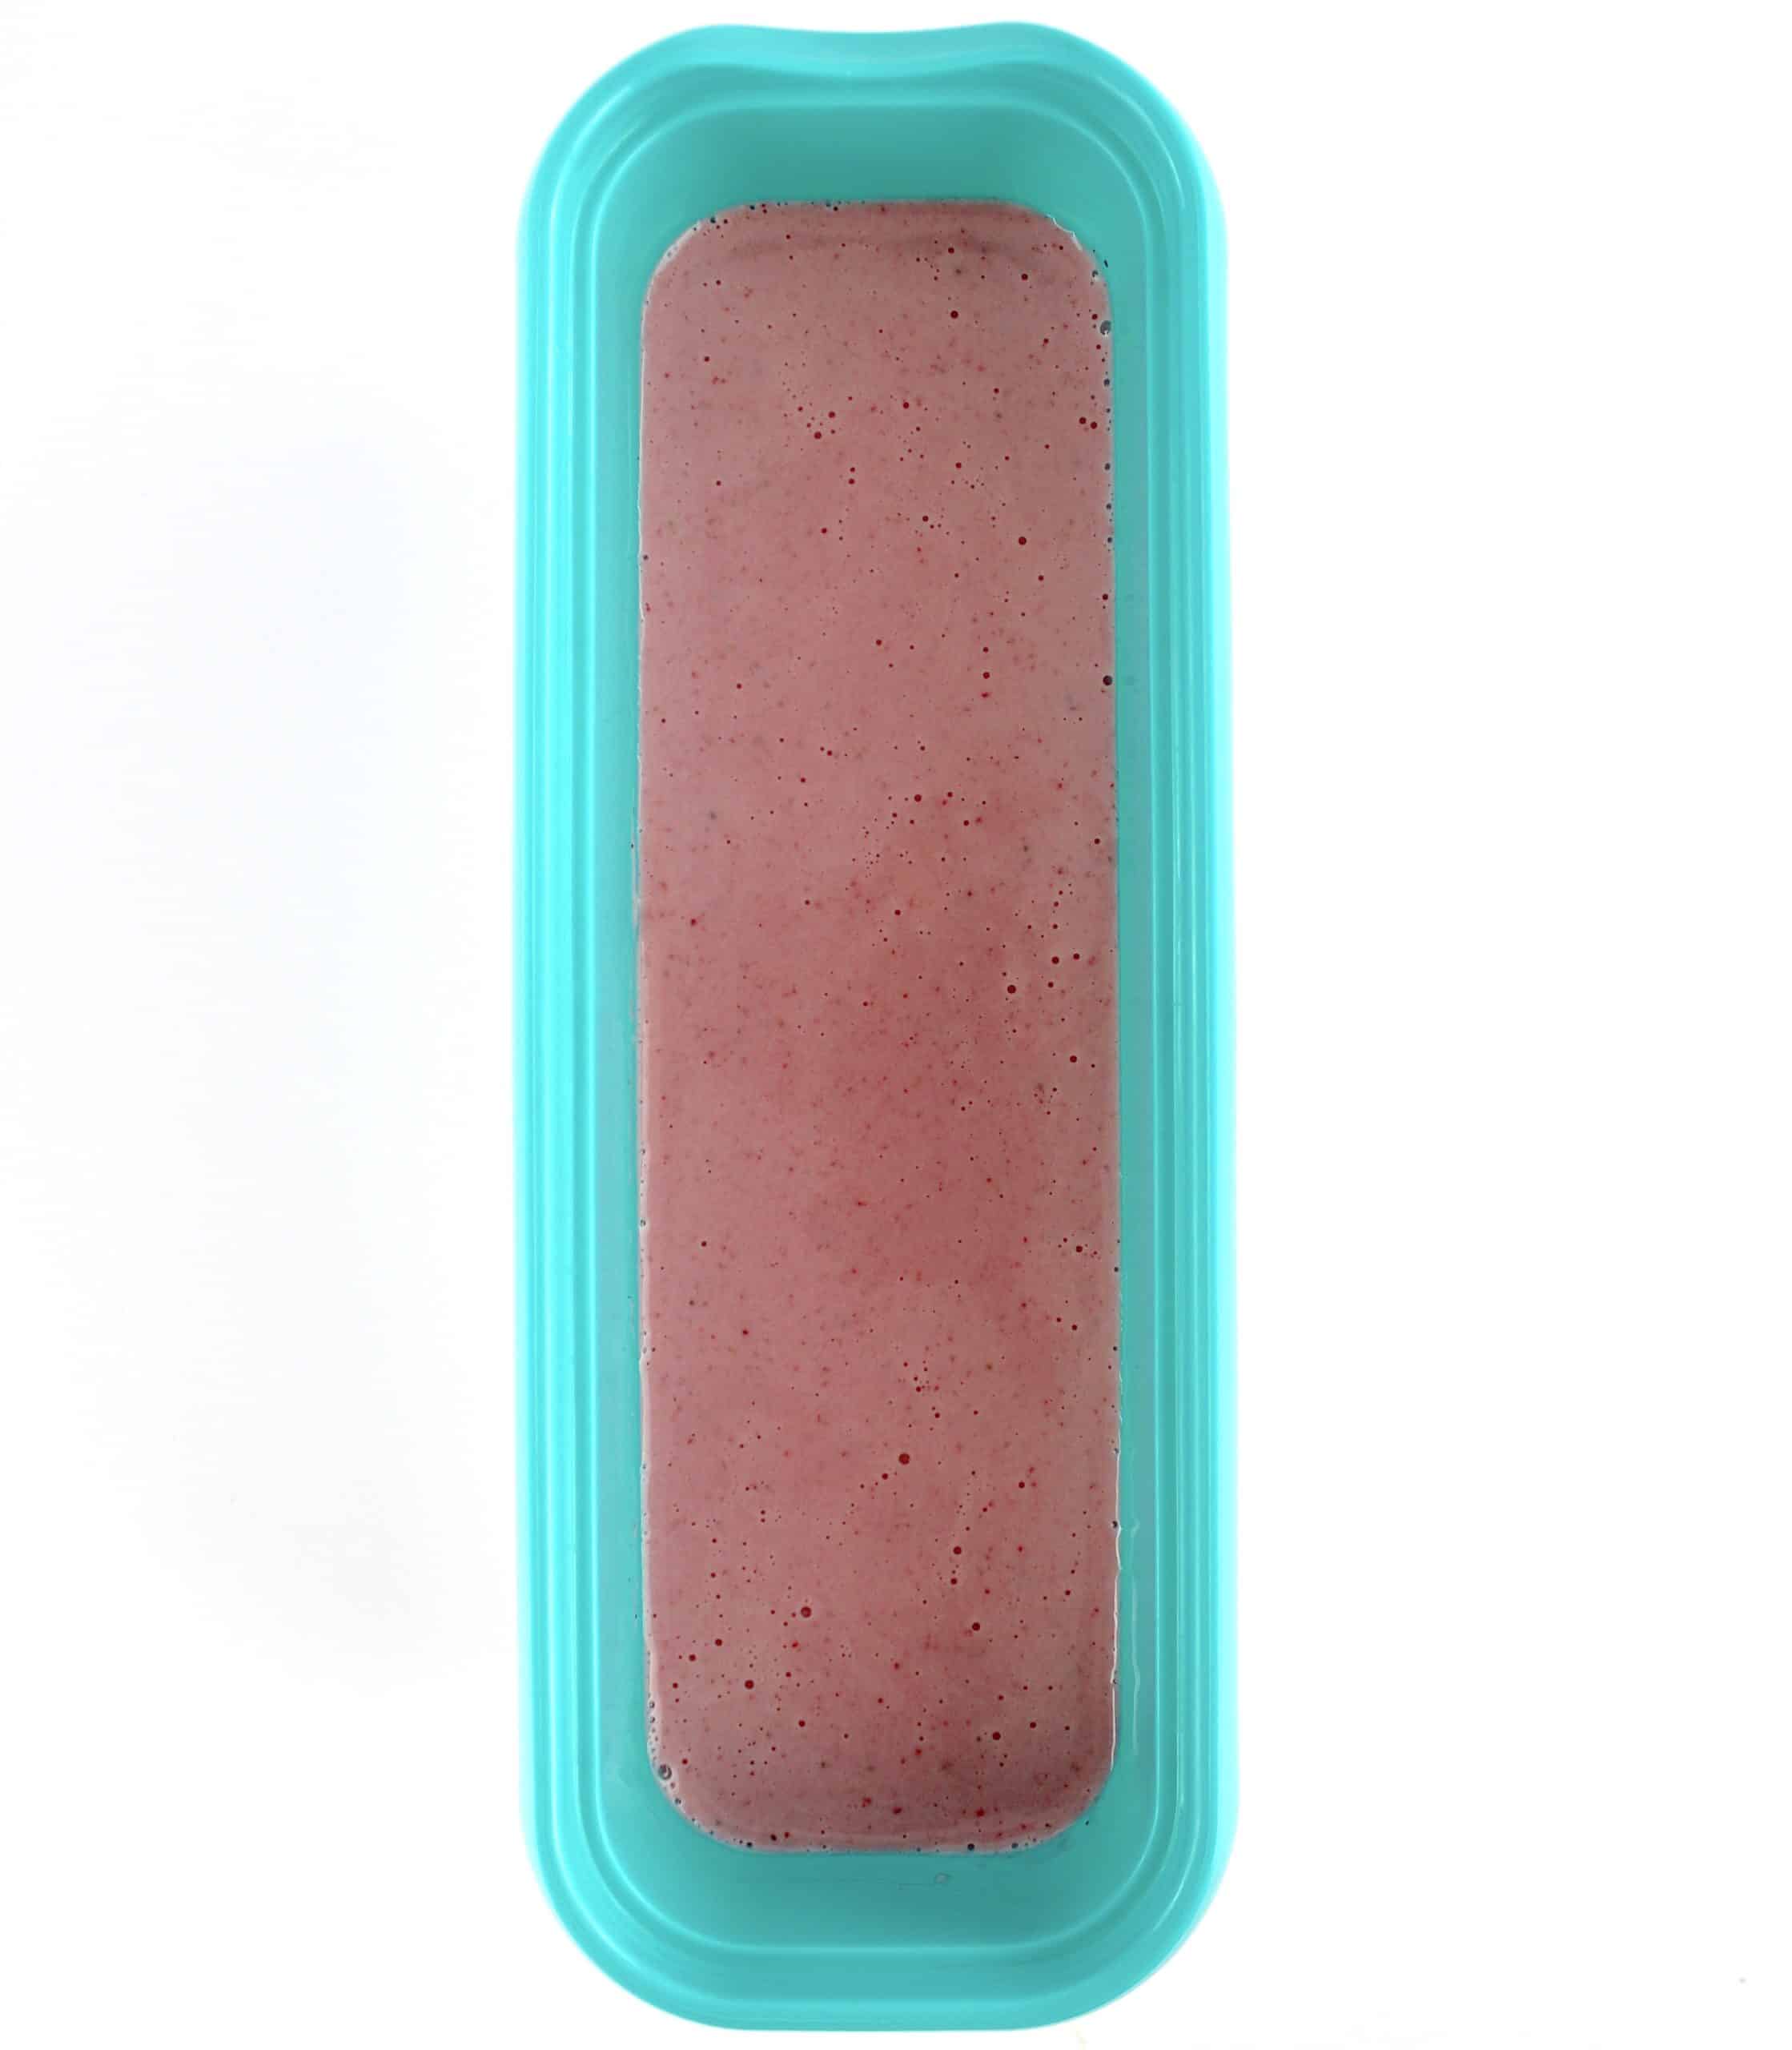 Keto Strawberry Frozen Yogurt in open teal ice cream container